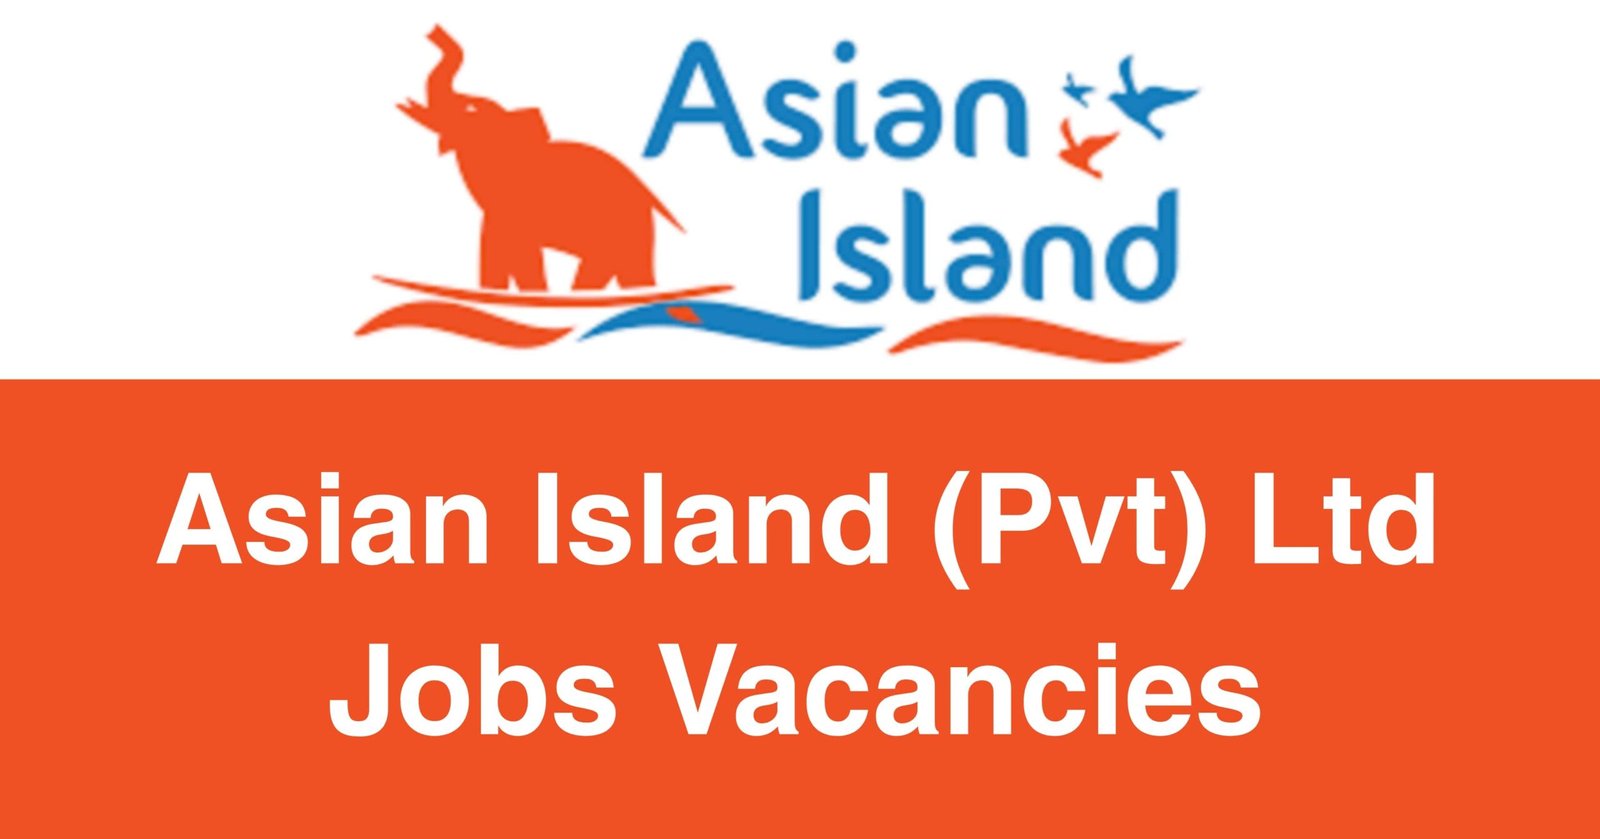 Asian Island (Pvt) Ltd Jobs Vacancies